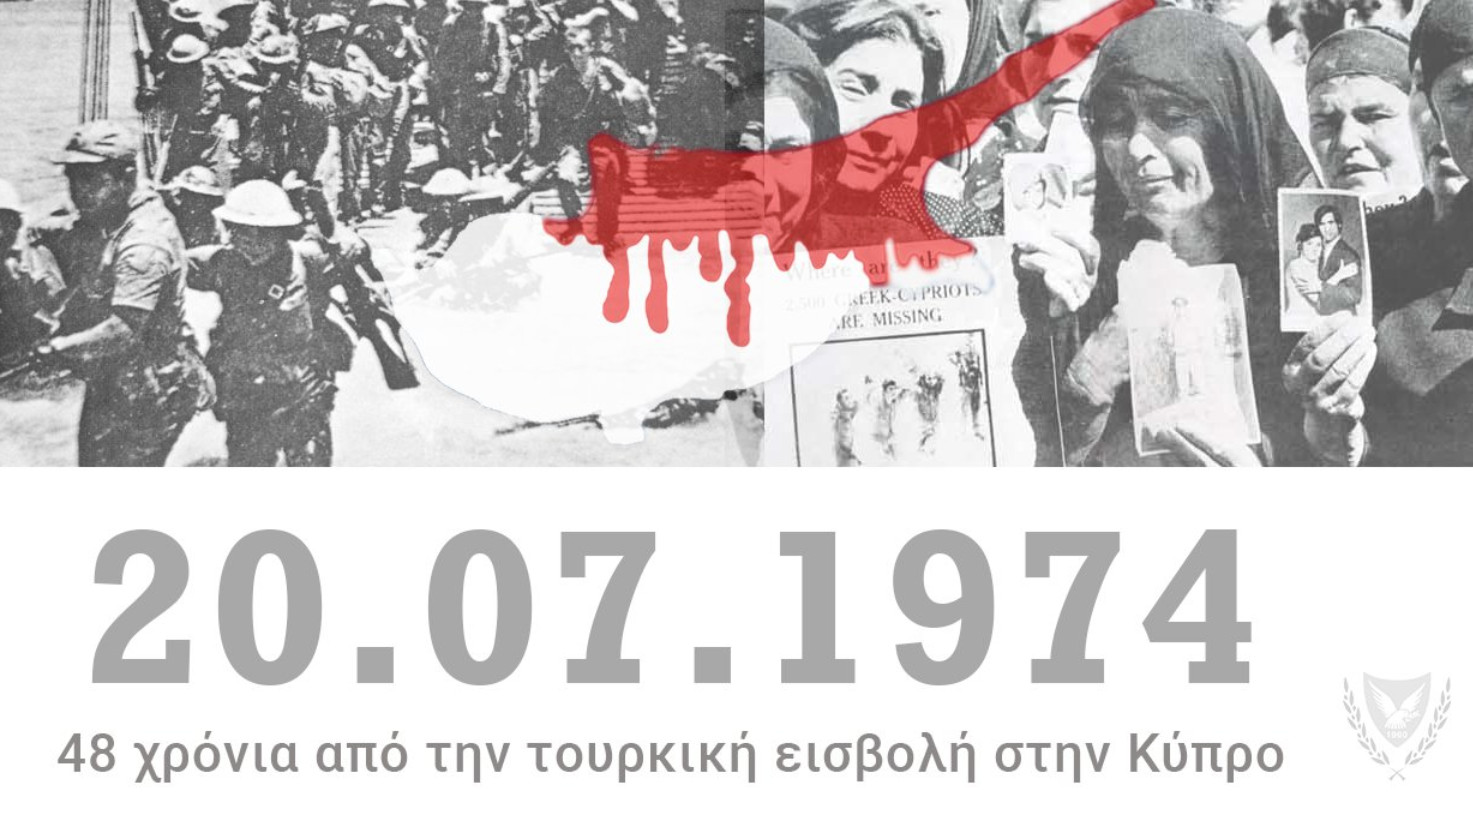 Kύπρος: 48 χρόνια μετά την εισβολή - Τα μηνύματα της πολιτειακής και πολιτικής ηγεσίας